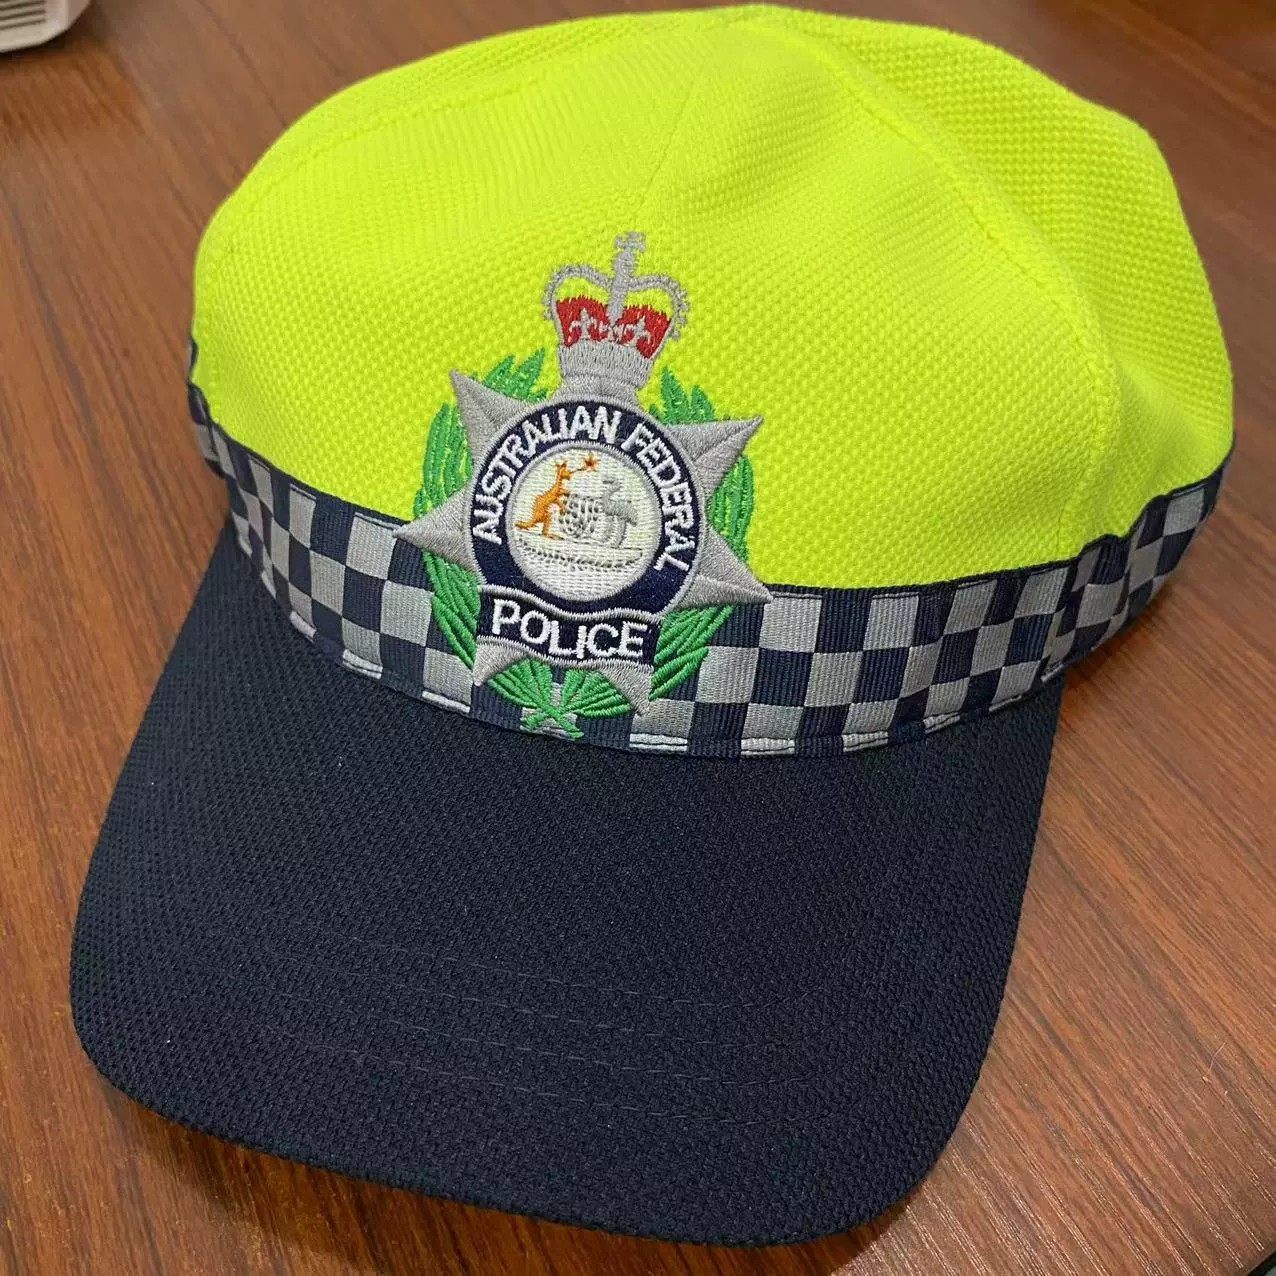 Australia police hat